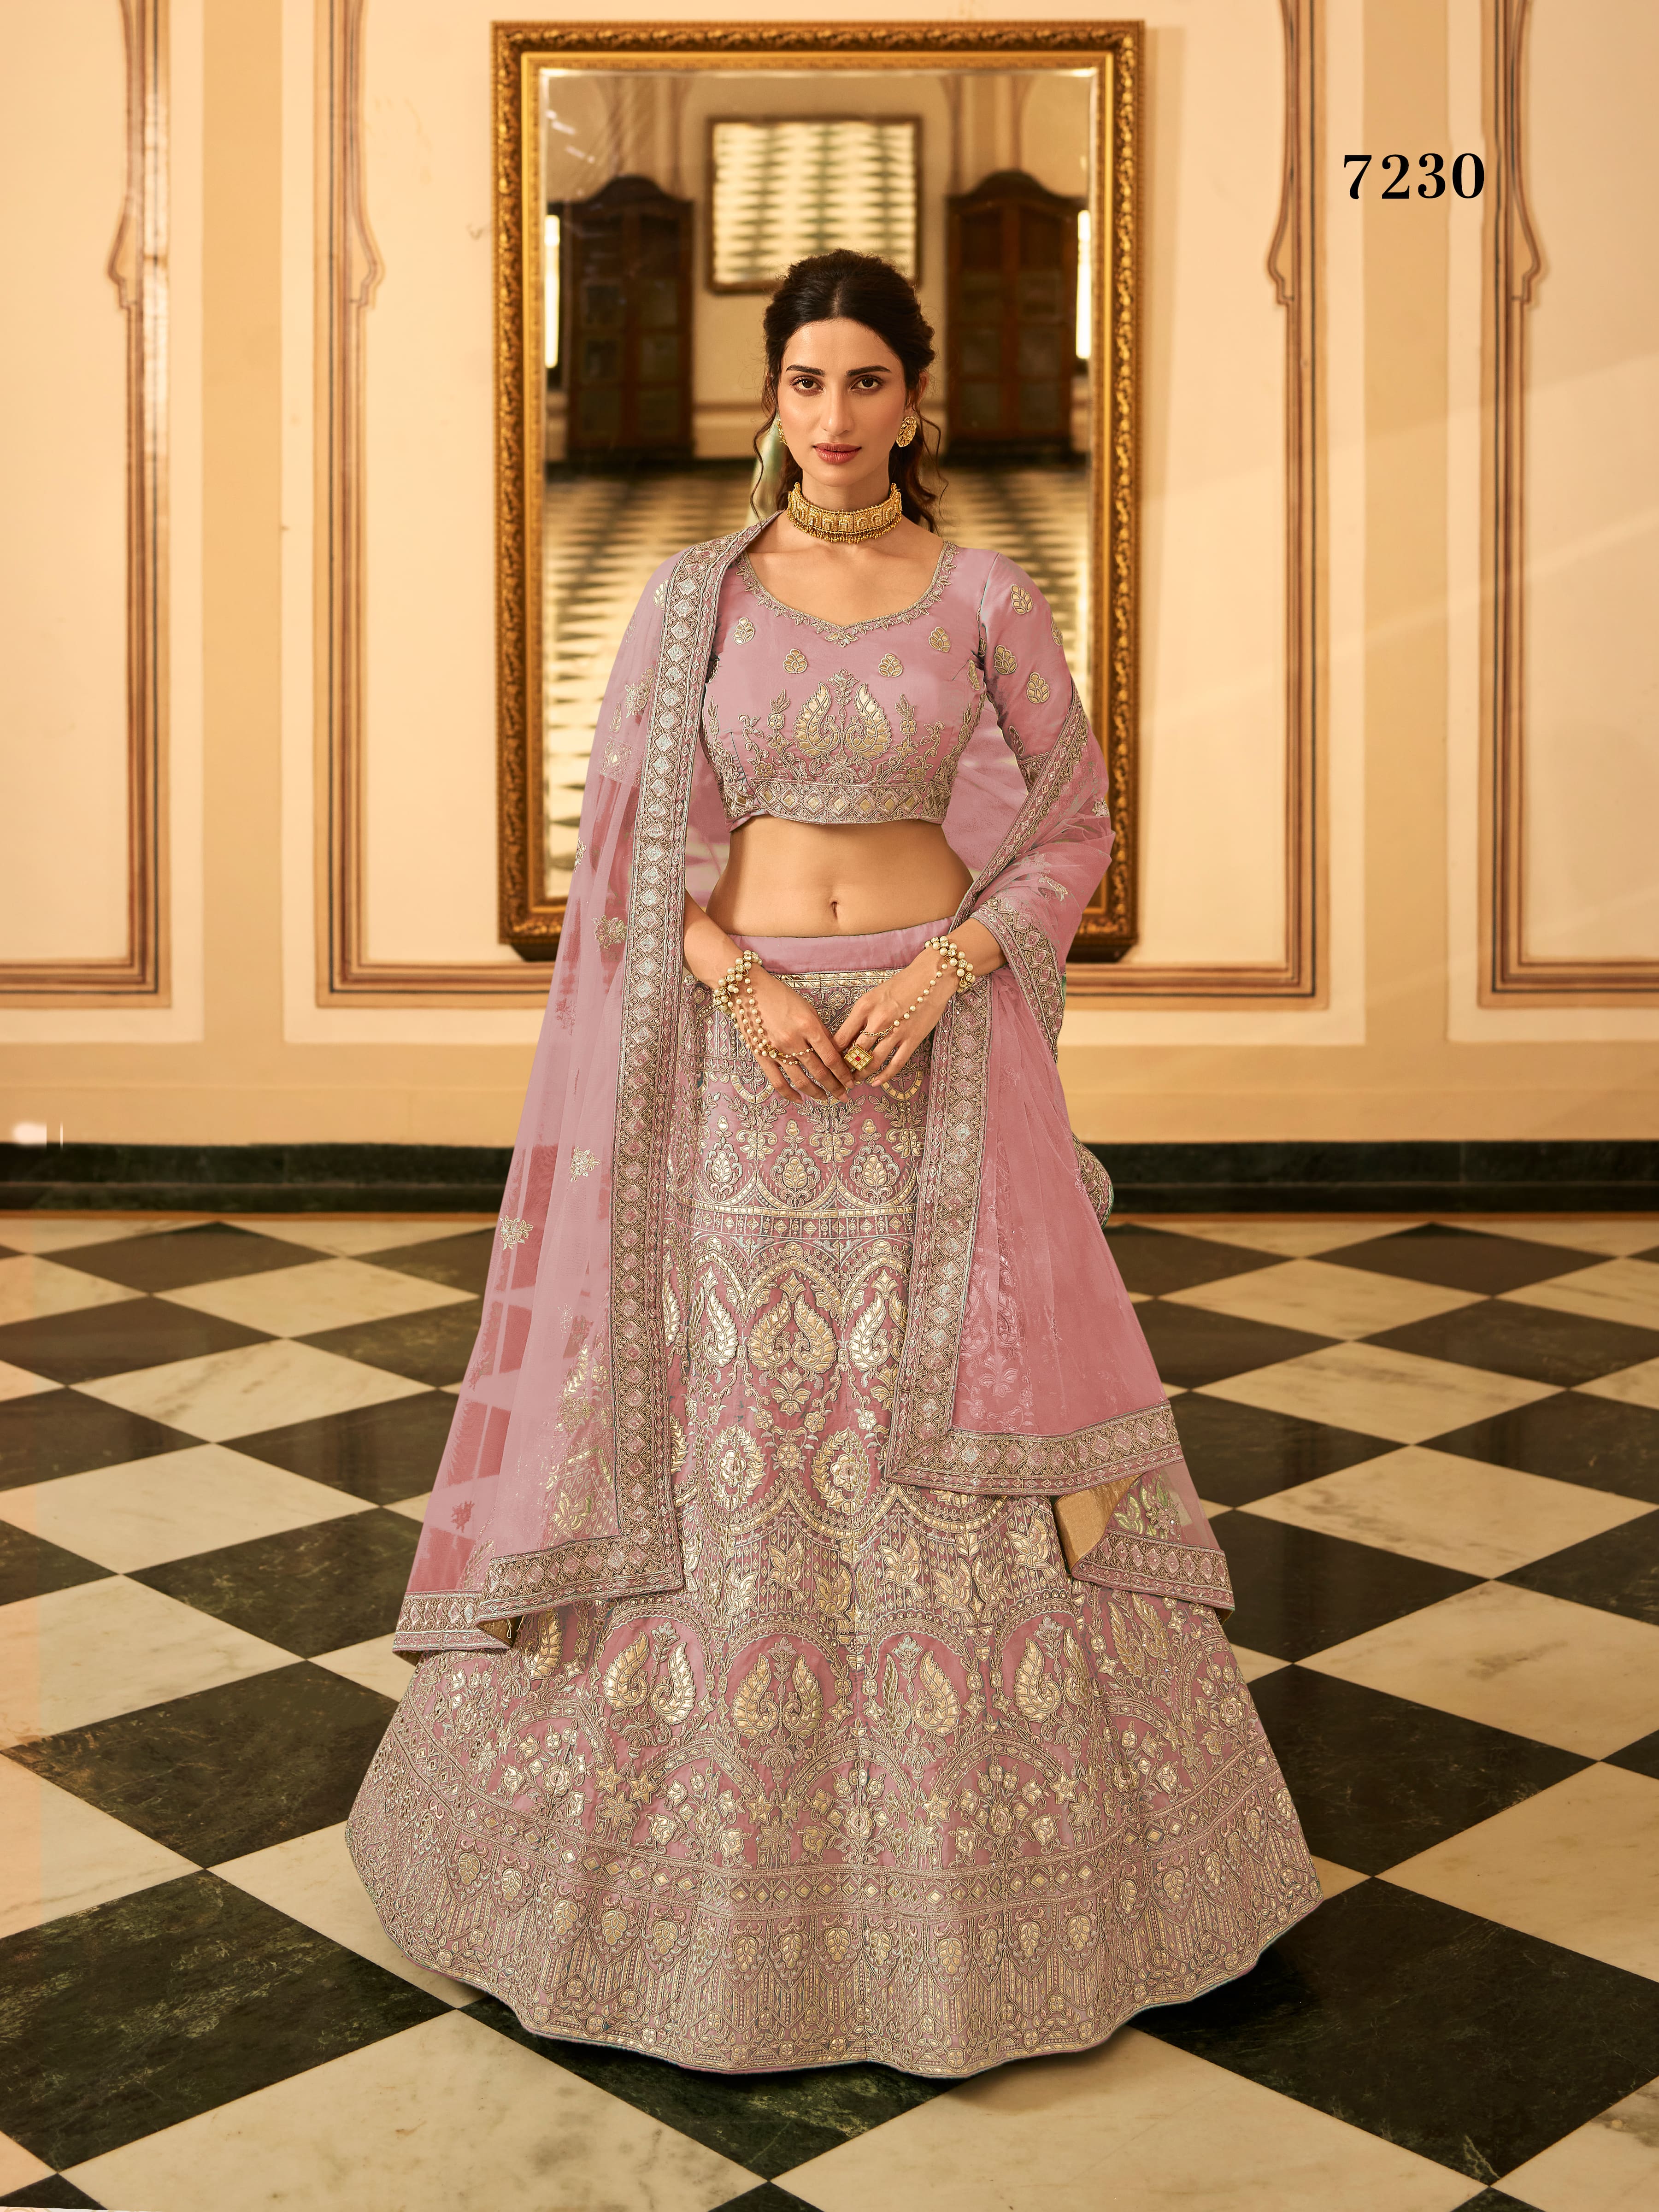 All sizes | Bridal Lacha Dress Designs, PurpleWedding Lachas@IndianRamp.com  | Flickr - Photo Sharing!